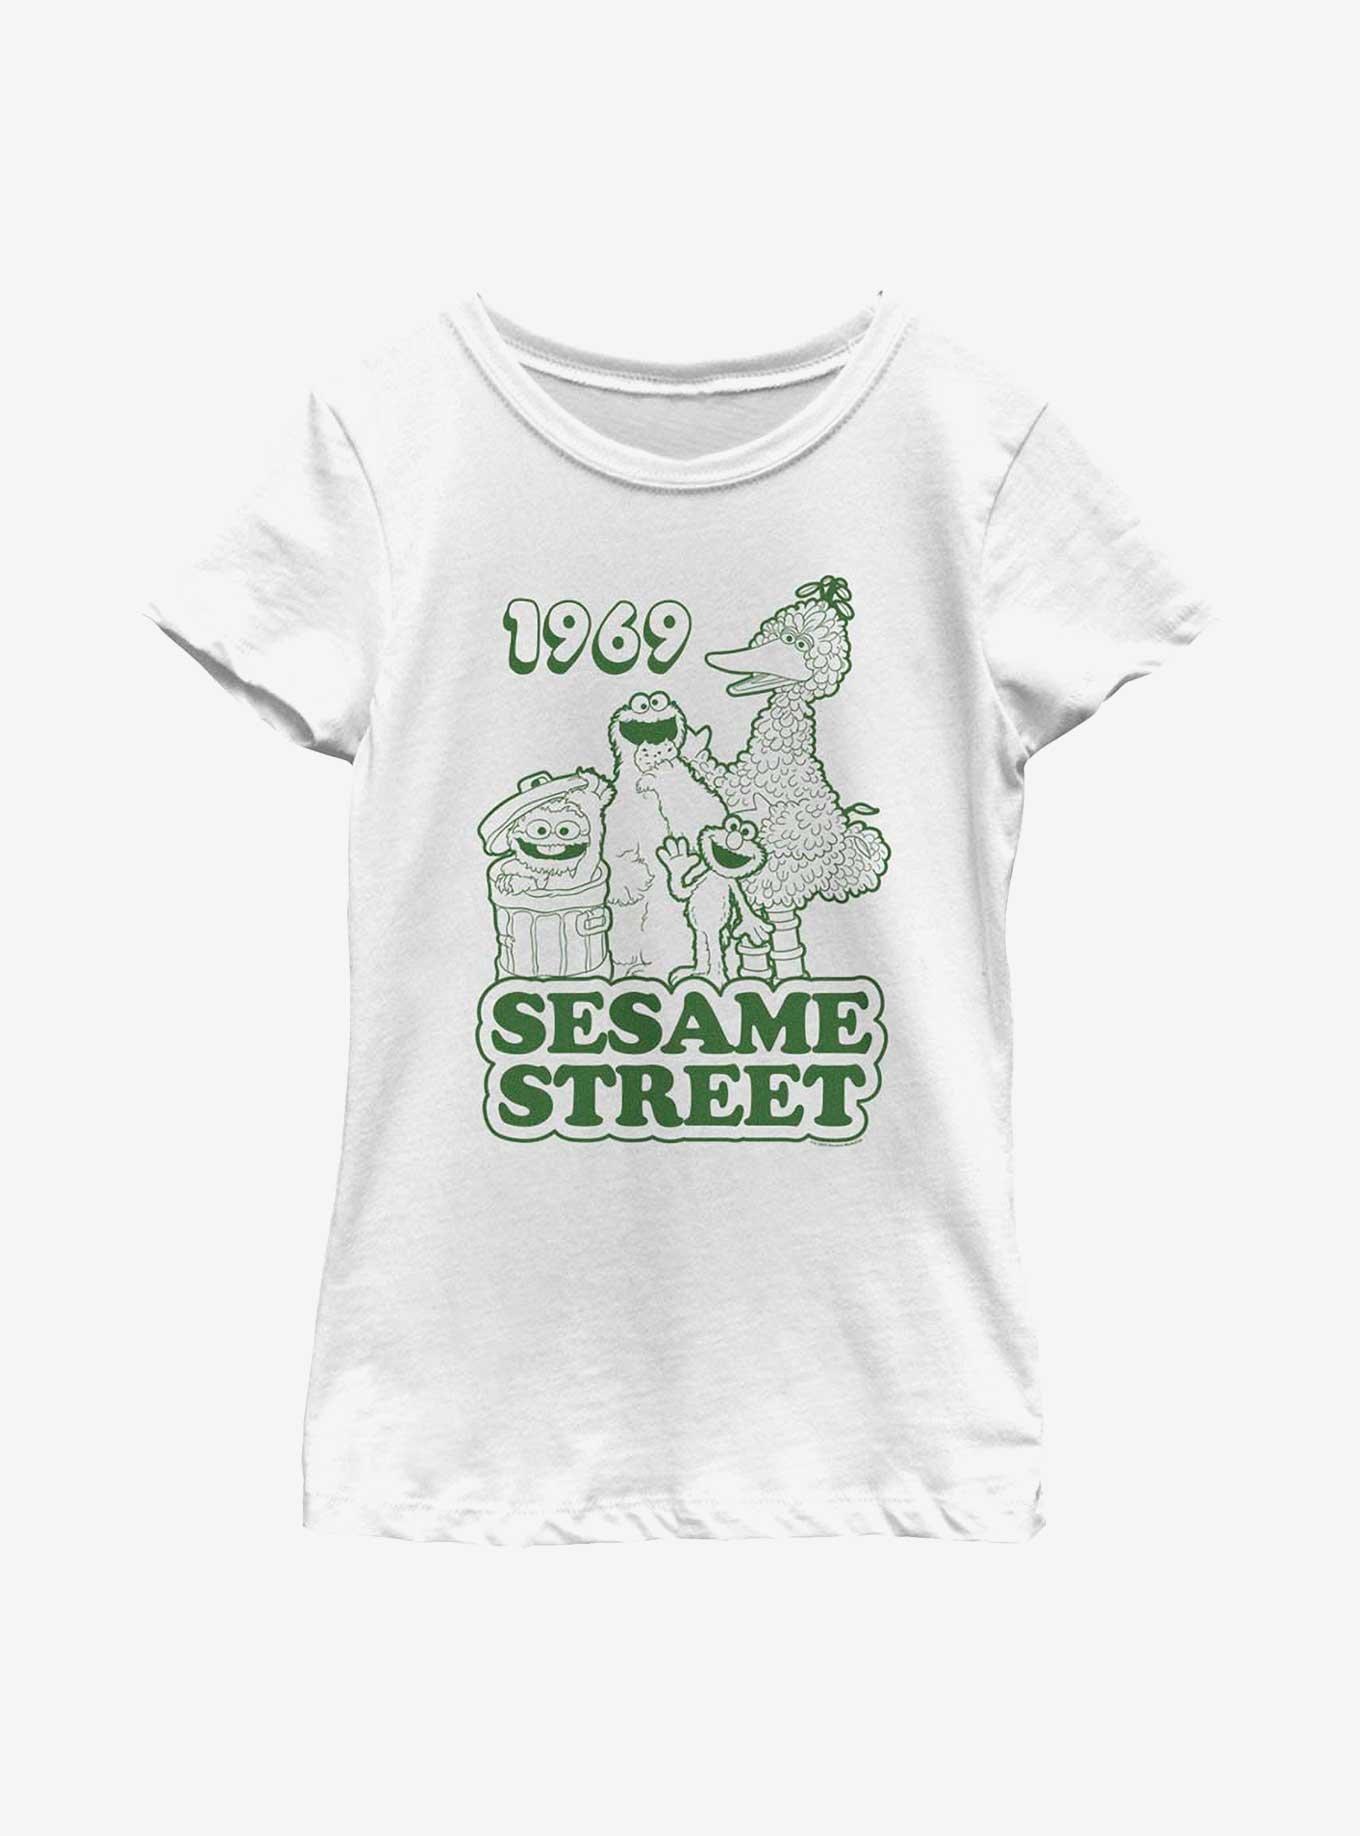 Sesame Street 1969 Group Youth Girls T-Shirt, WHITE, hi-res